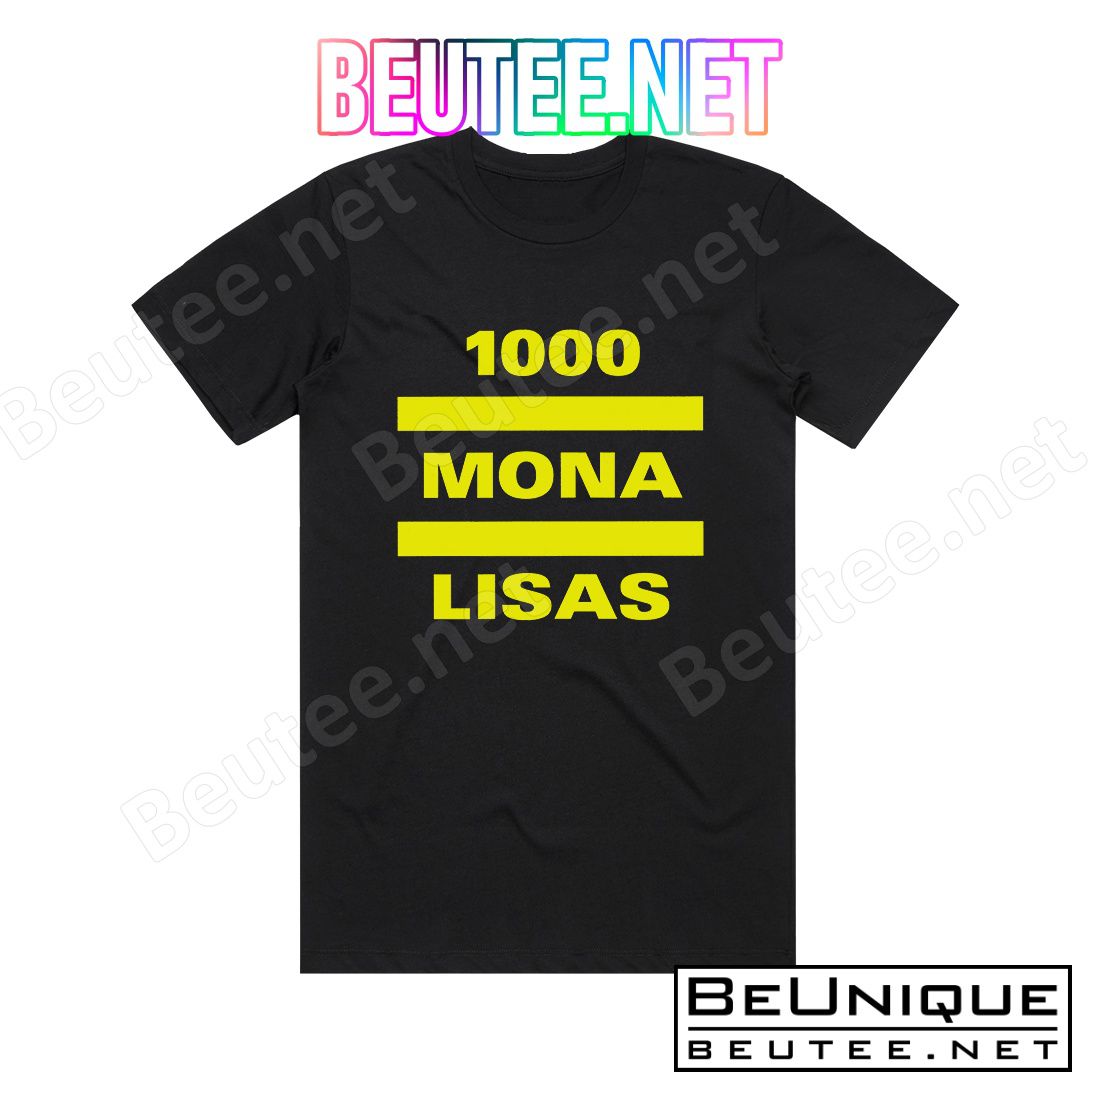 1000 Mona Lisas The Ep Album Cover T-Shirt